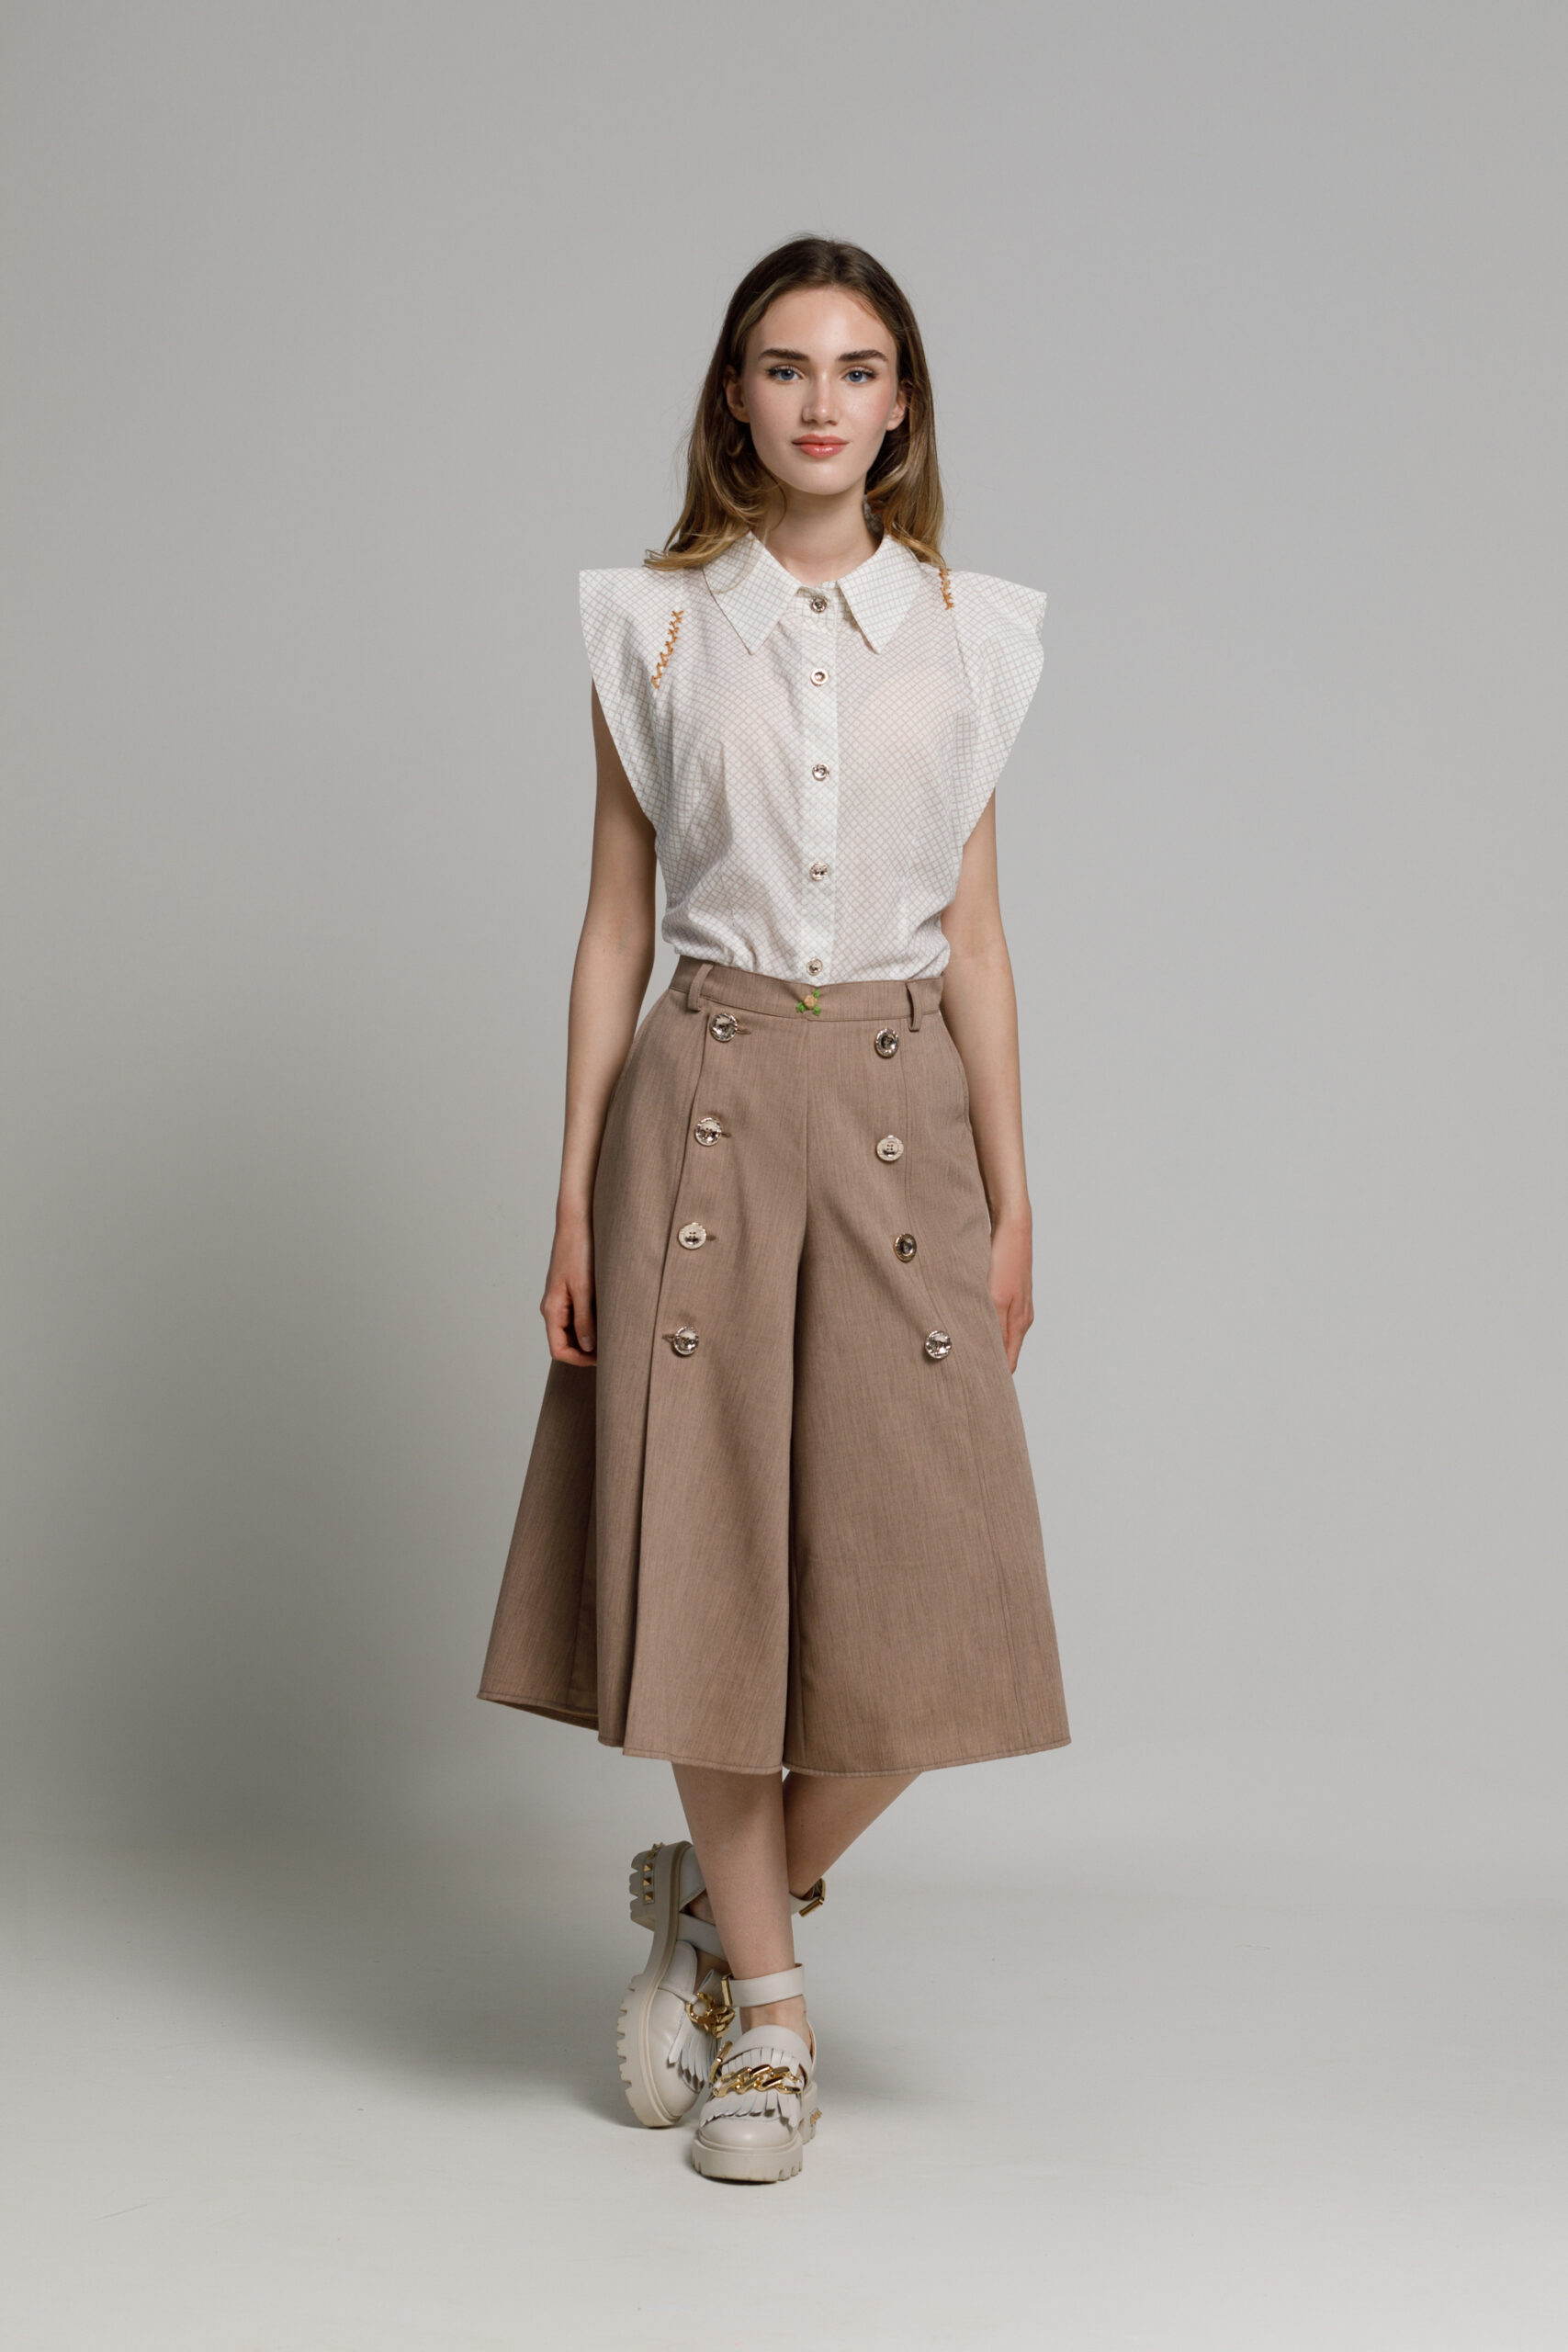 NEVIN Skirt - Pantalon in beige fabric. Natural fabrics, original design, handmade embroidery